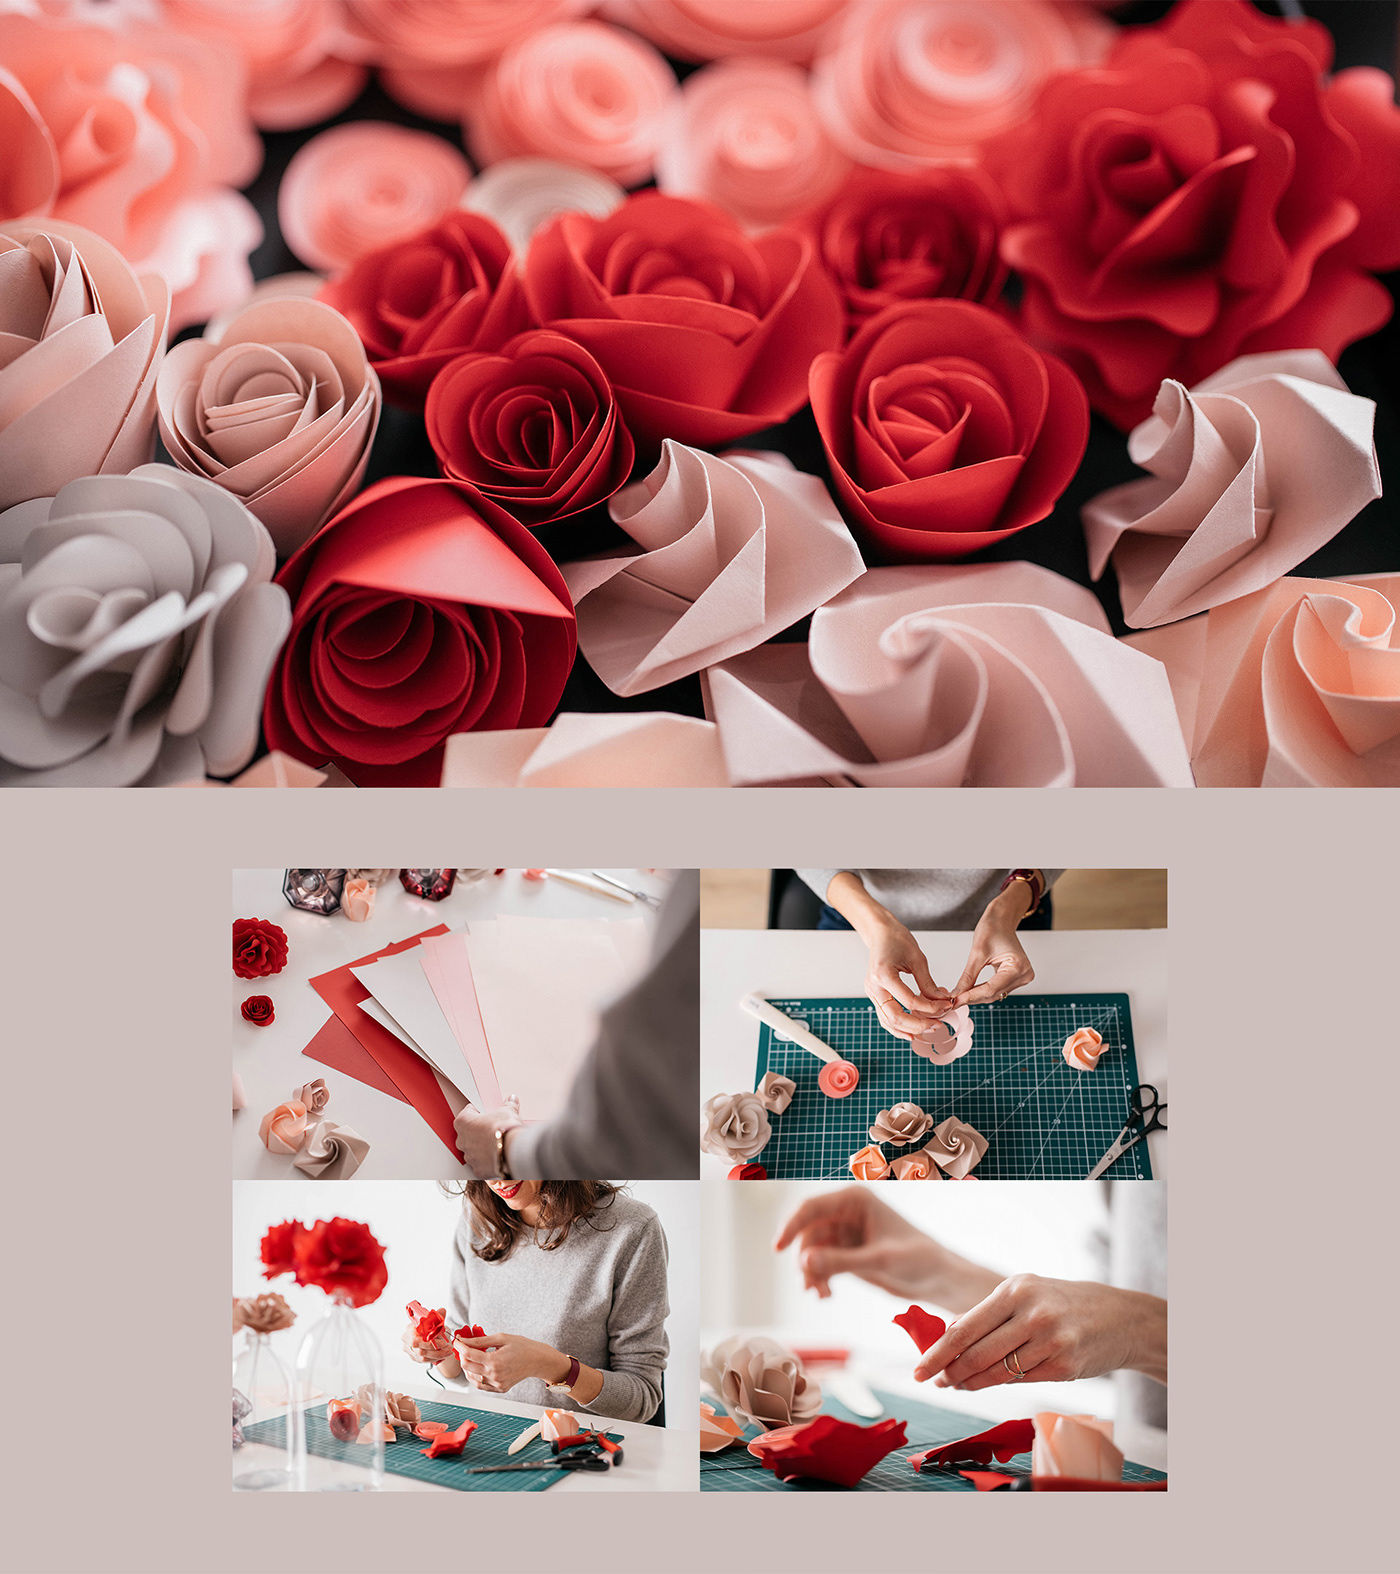 Lancome content Advertising  Roses origami  Fragrance set design  art direction 